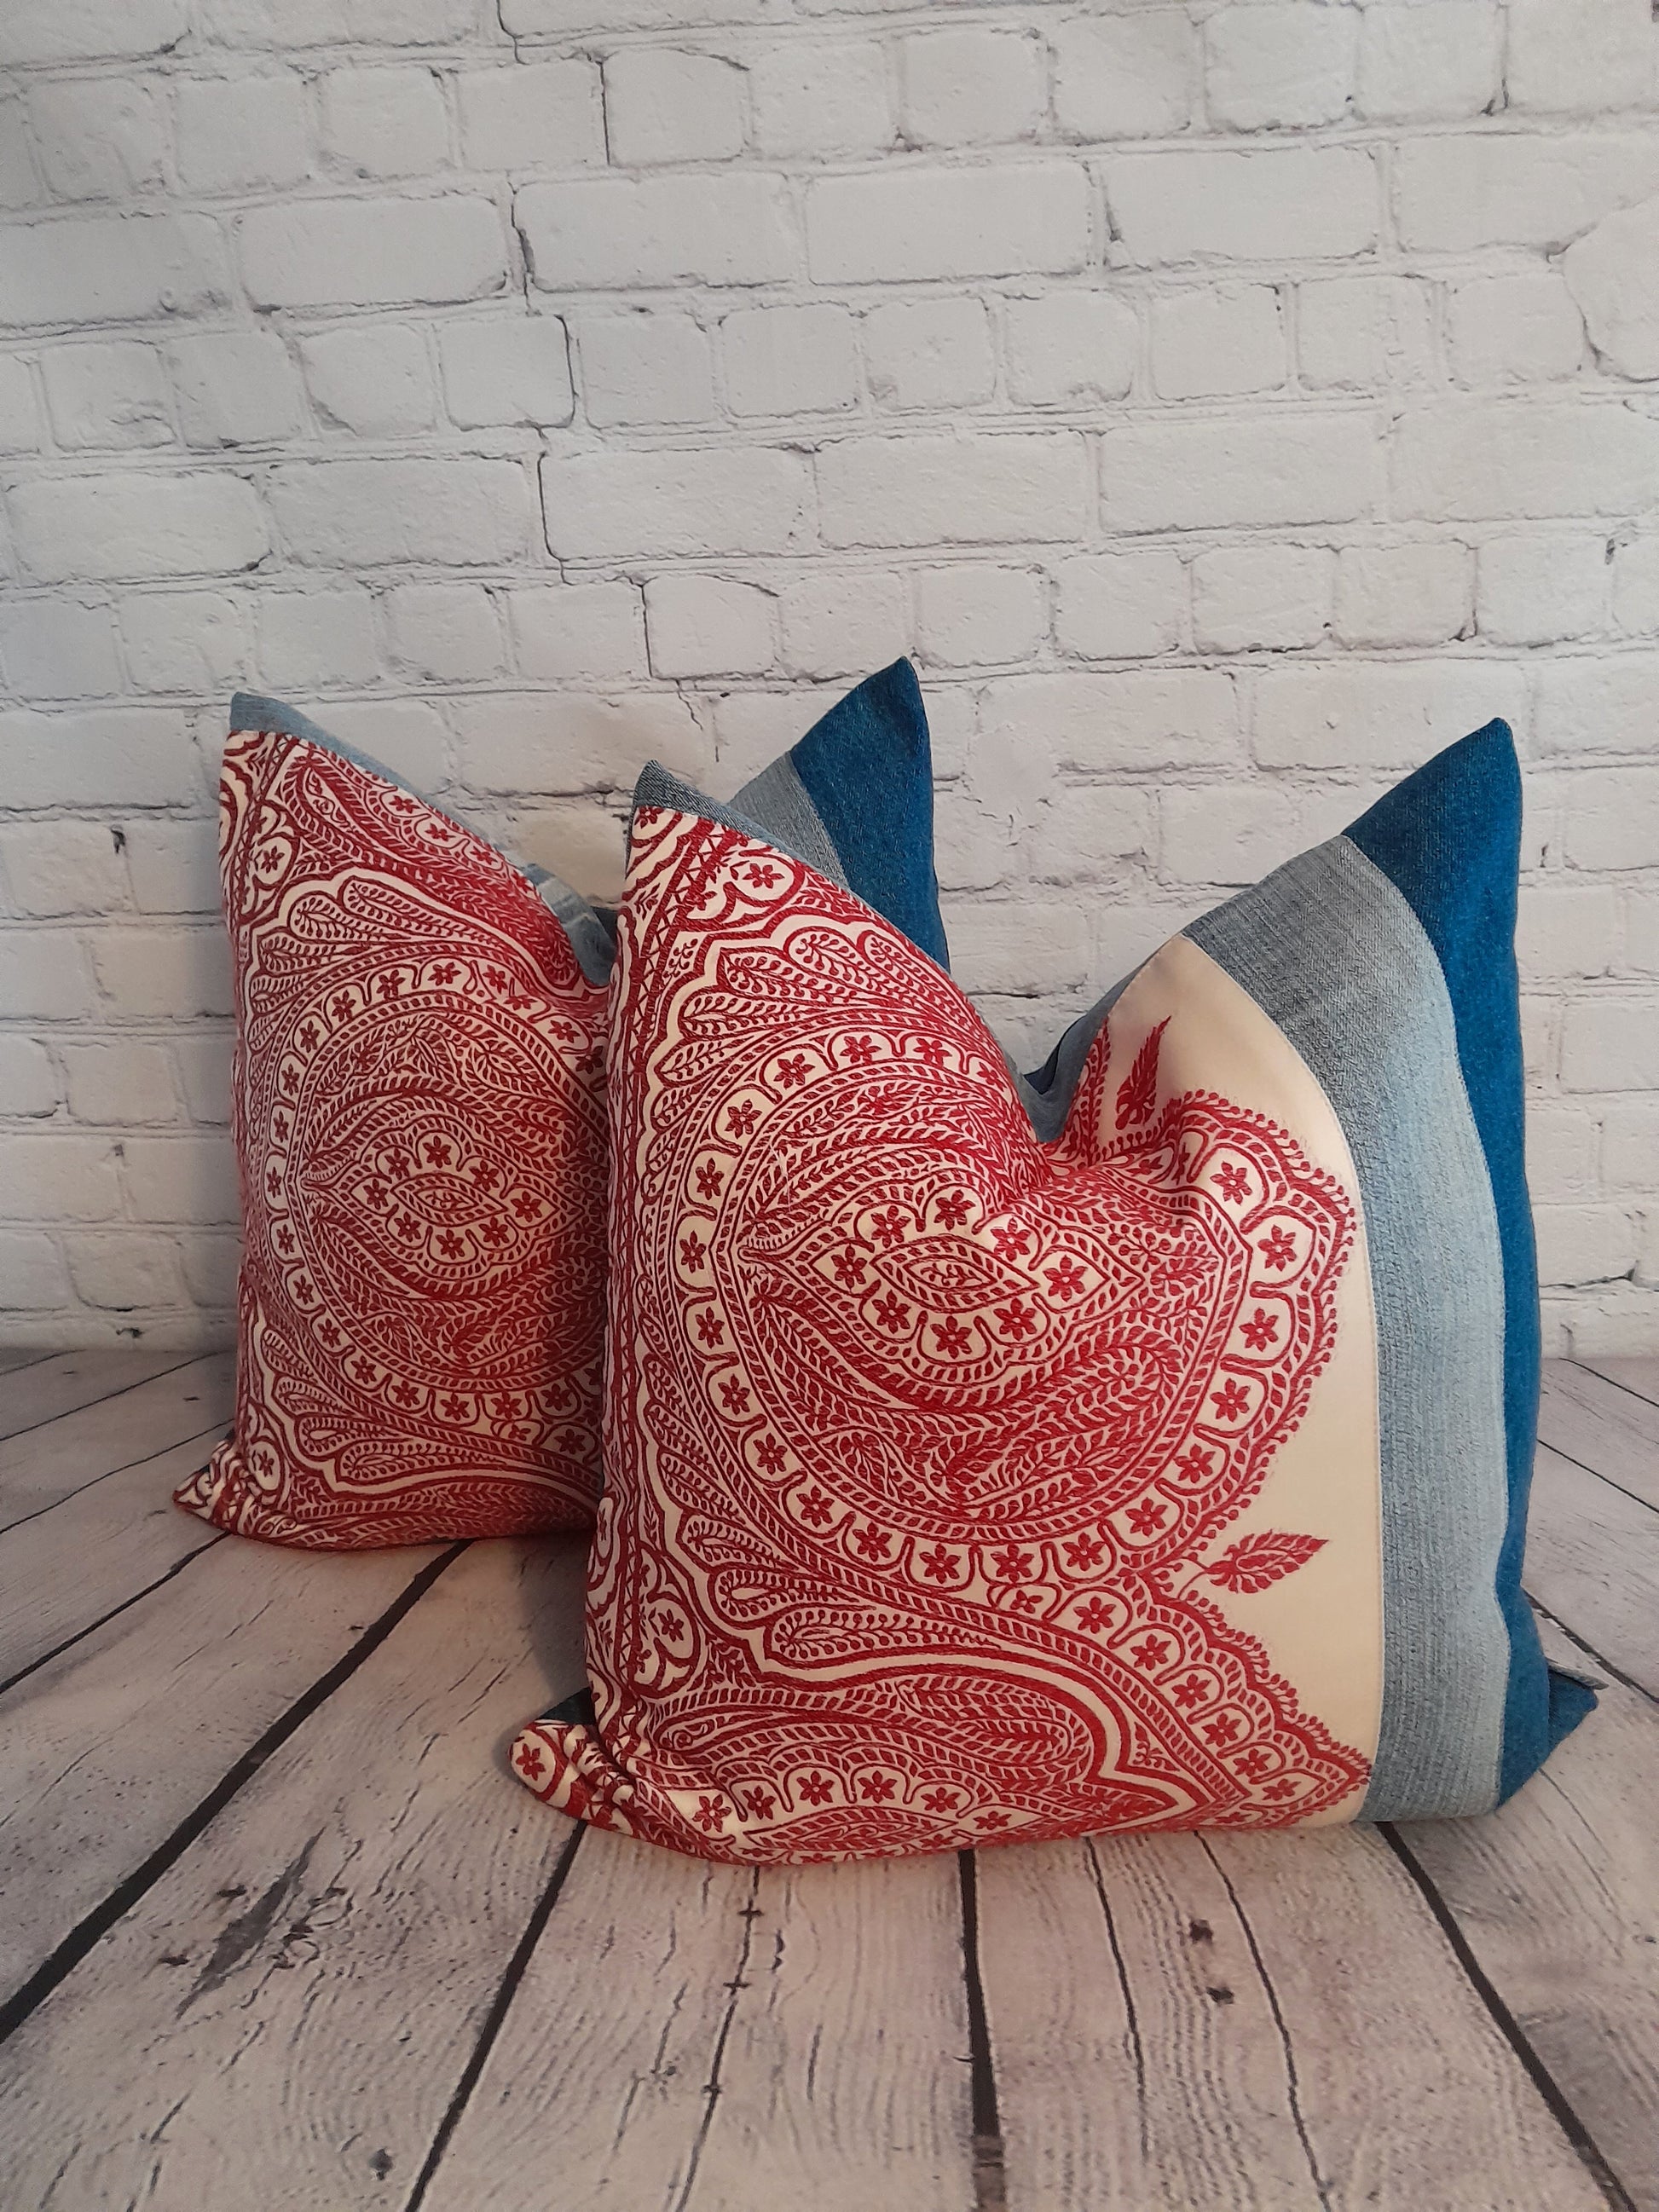 denim and embroidered cushion luxury boho